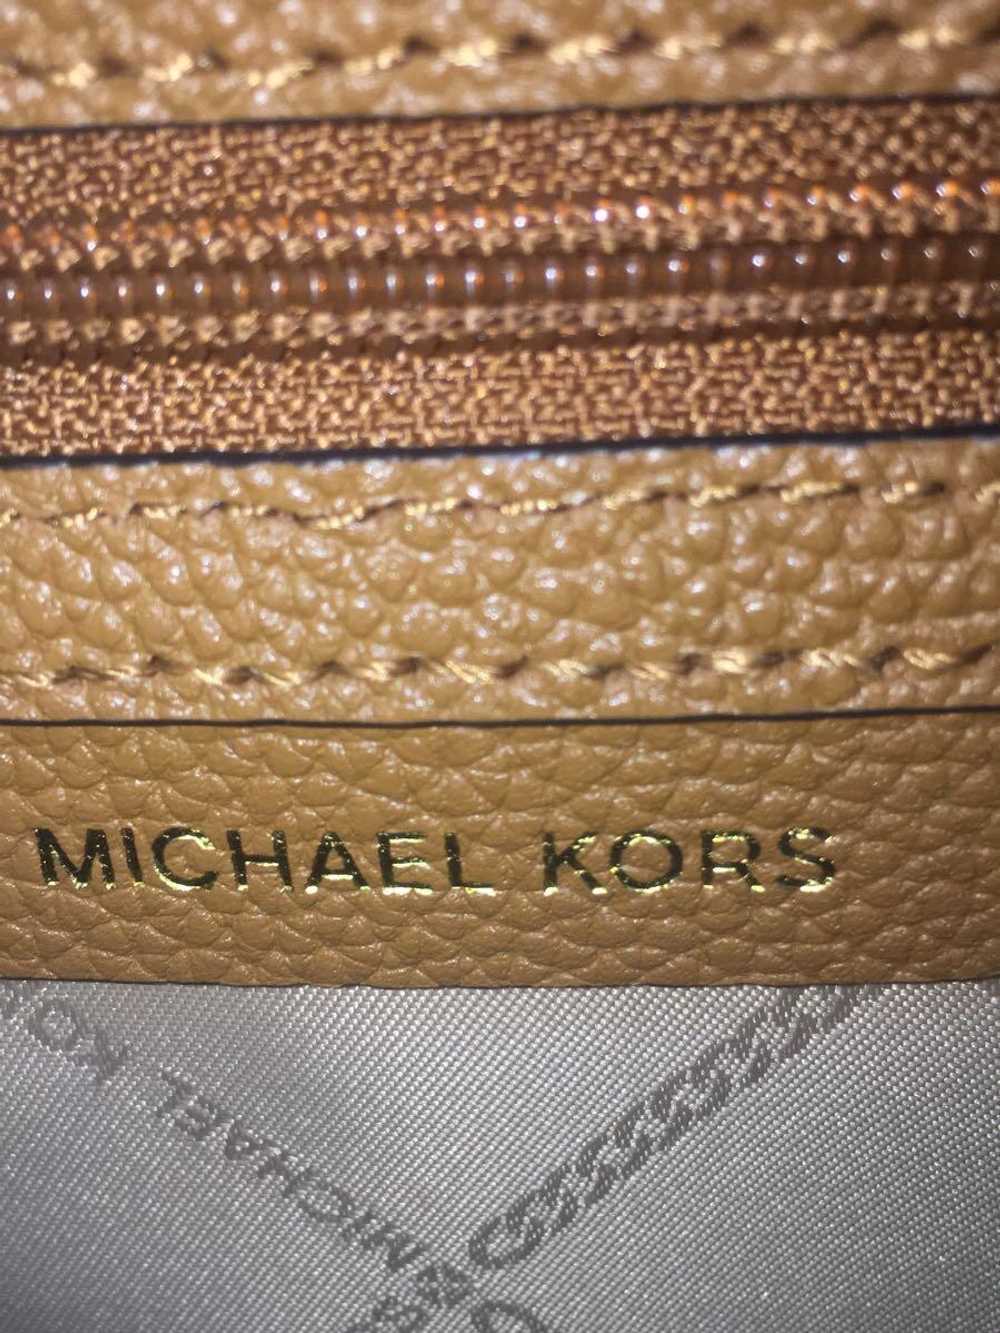 Michael Kors Handbag/Canvas/Brw/Plain Bag - image 5